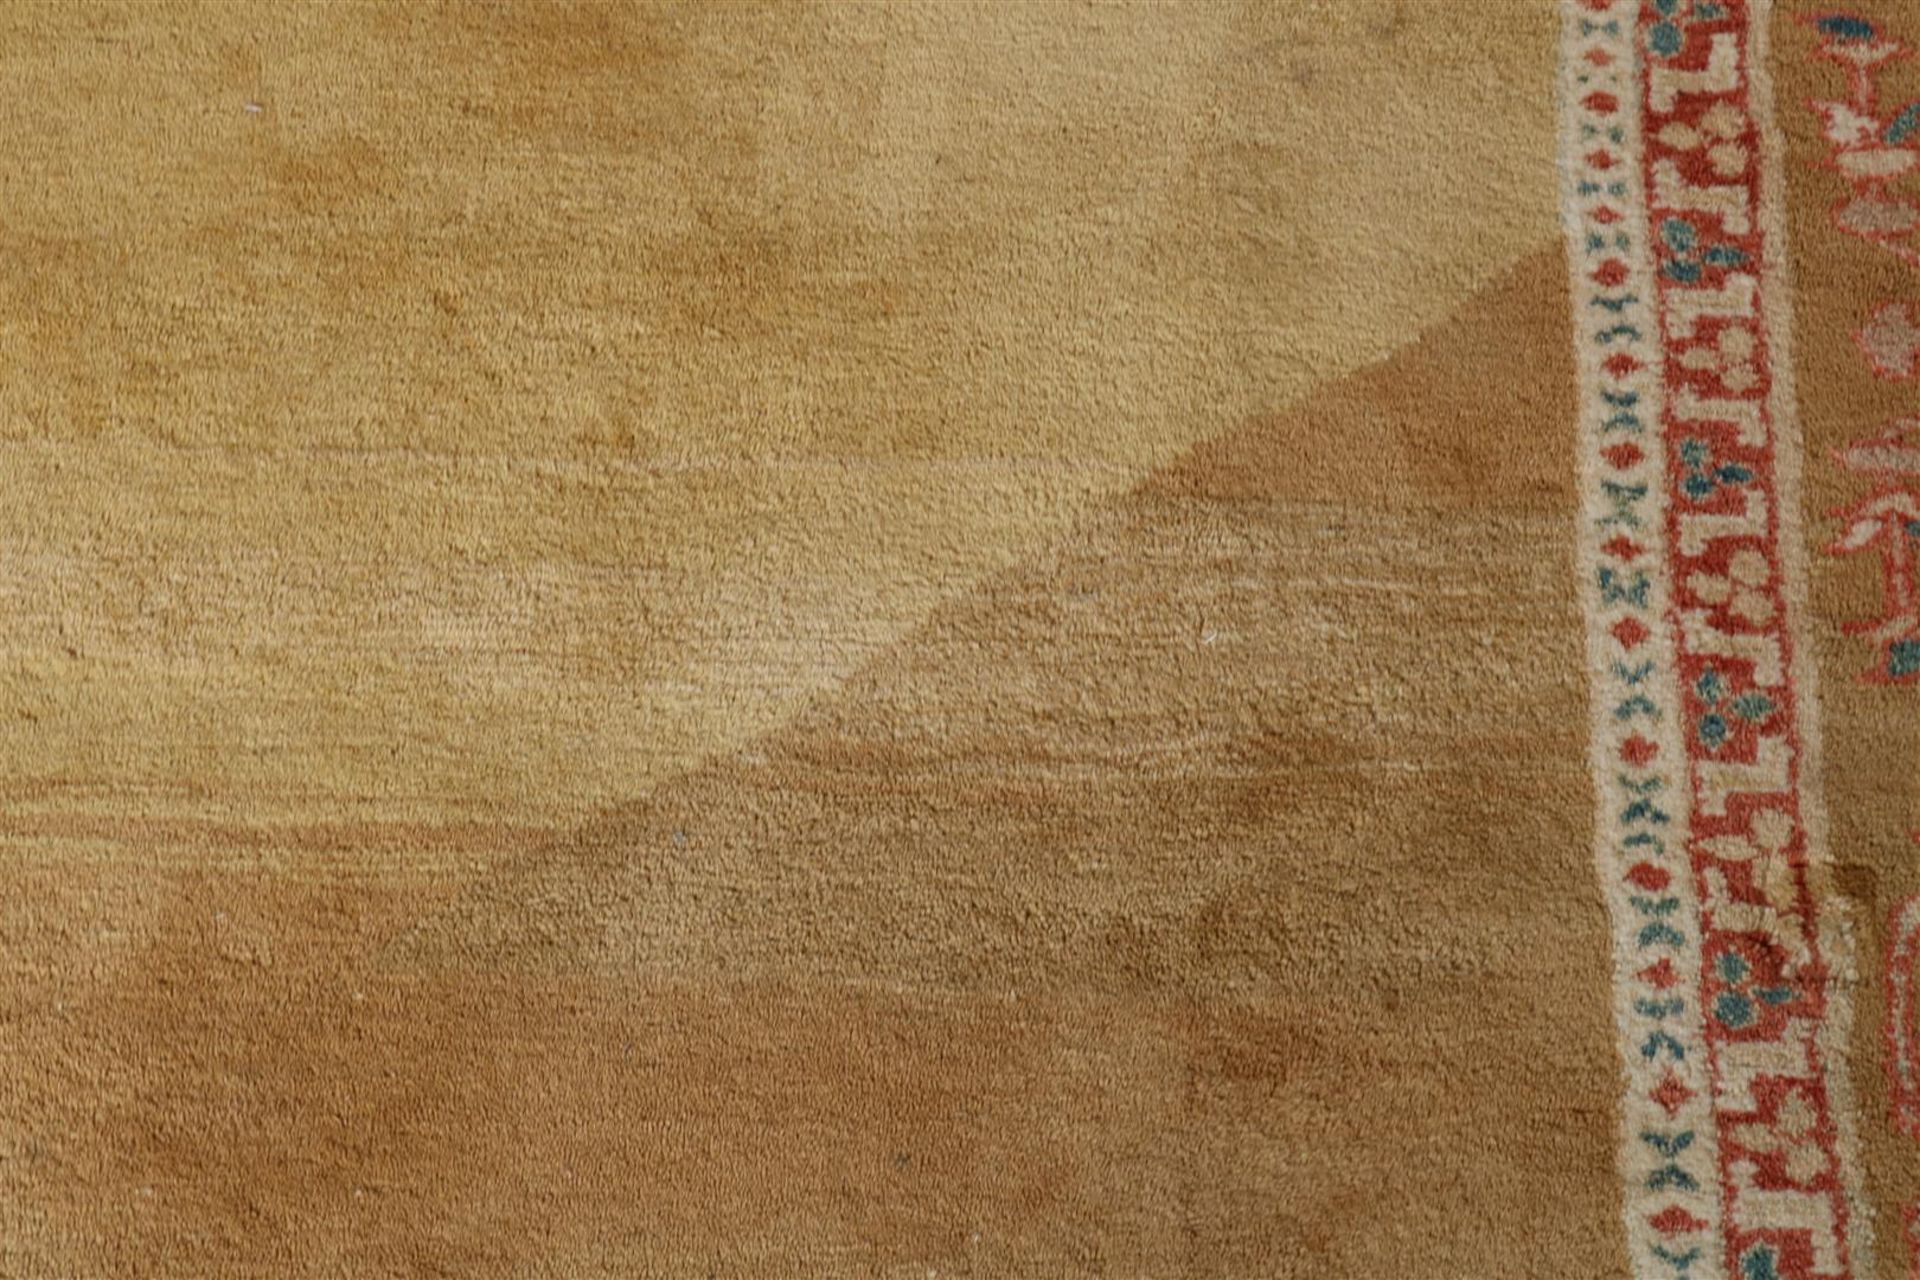 Carpet, Nepal 310 x 250 cm. (discolored) - Image 2 of 3